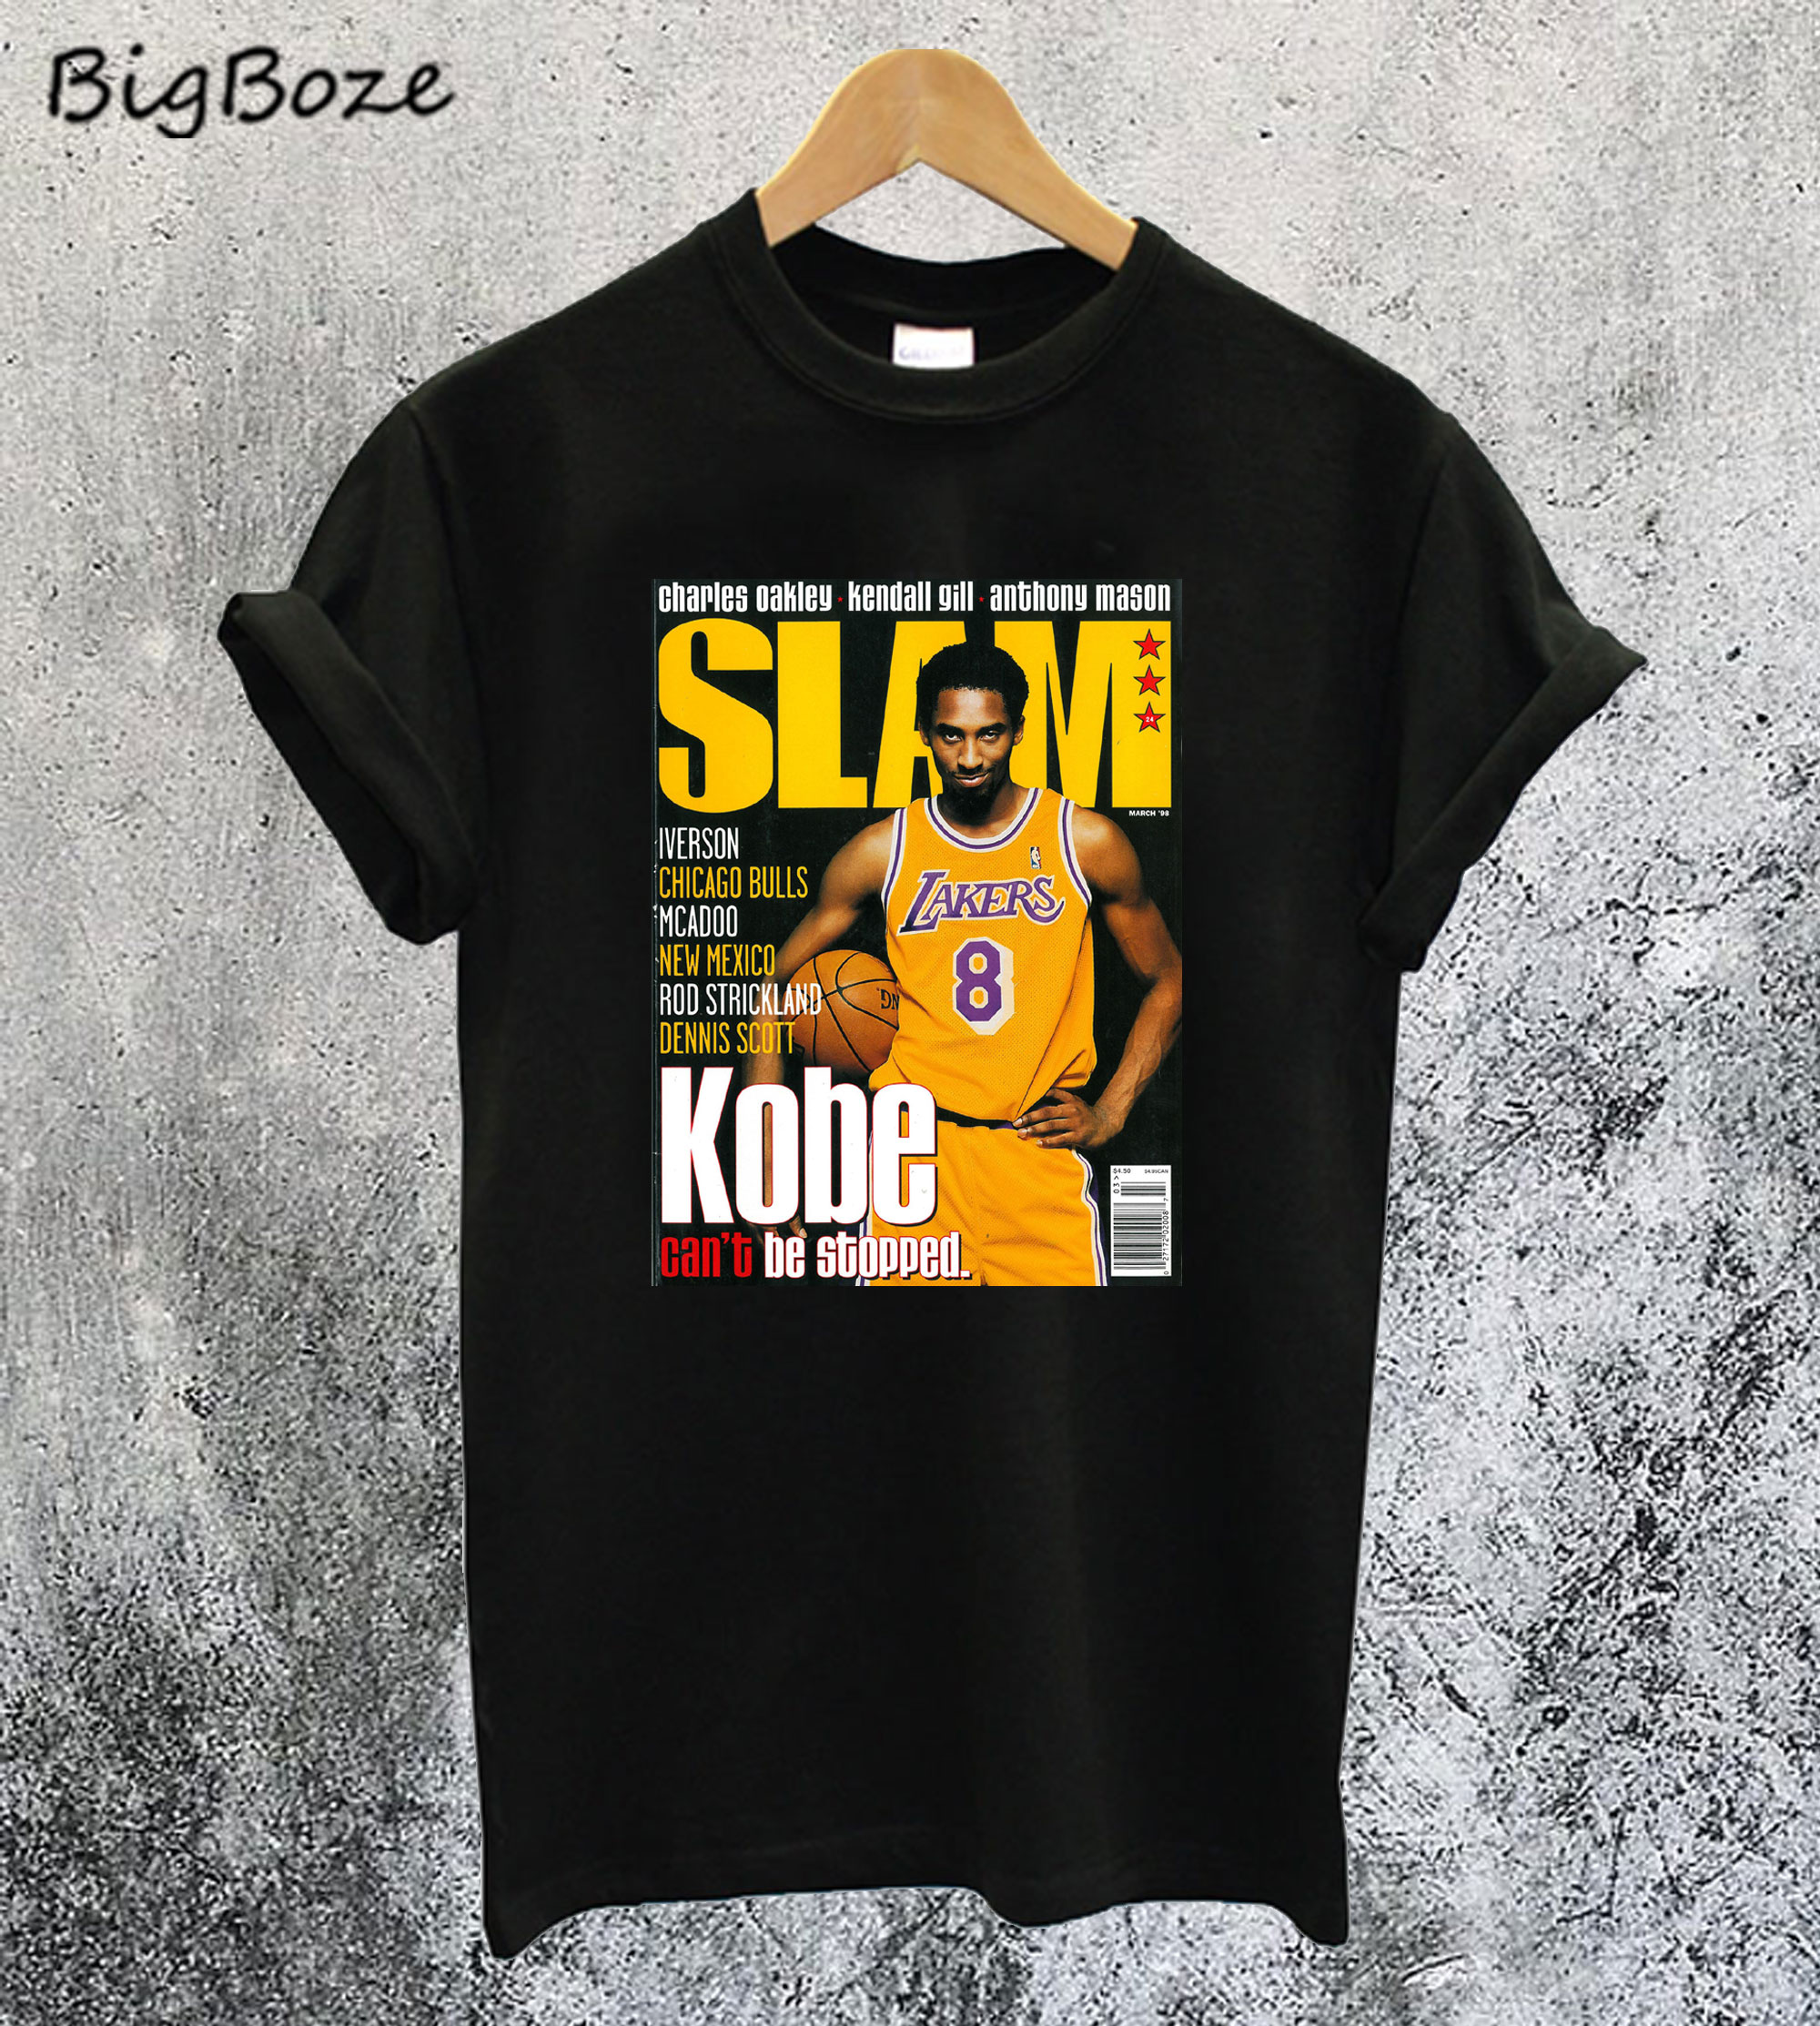 best kobe shirts